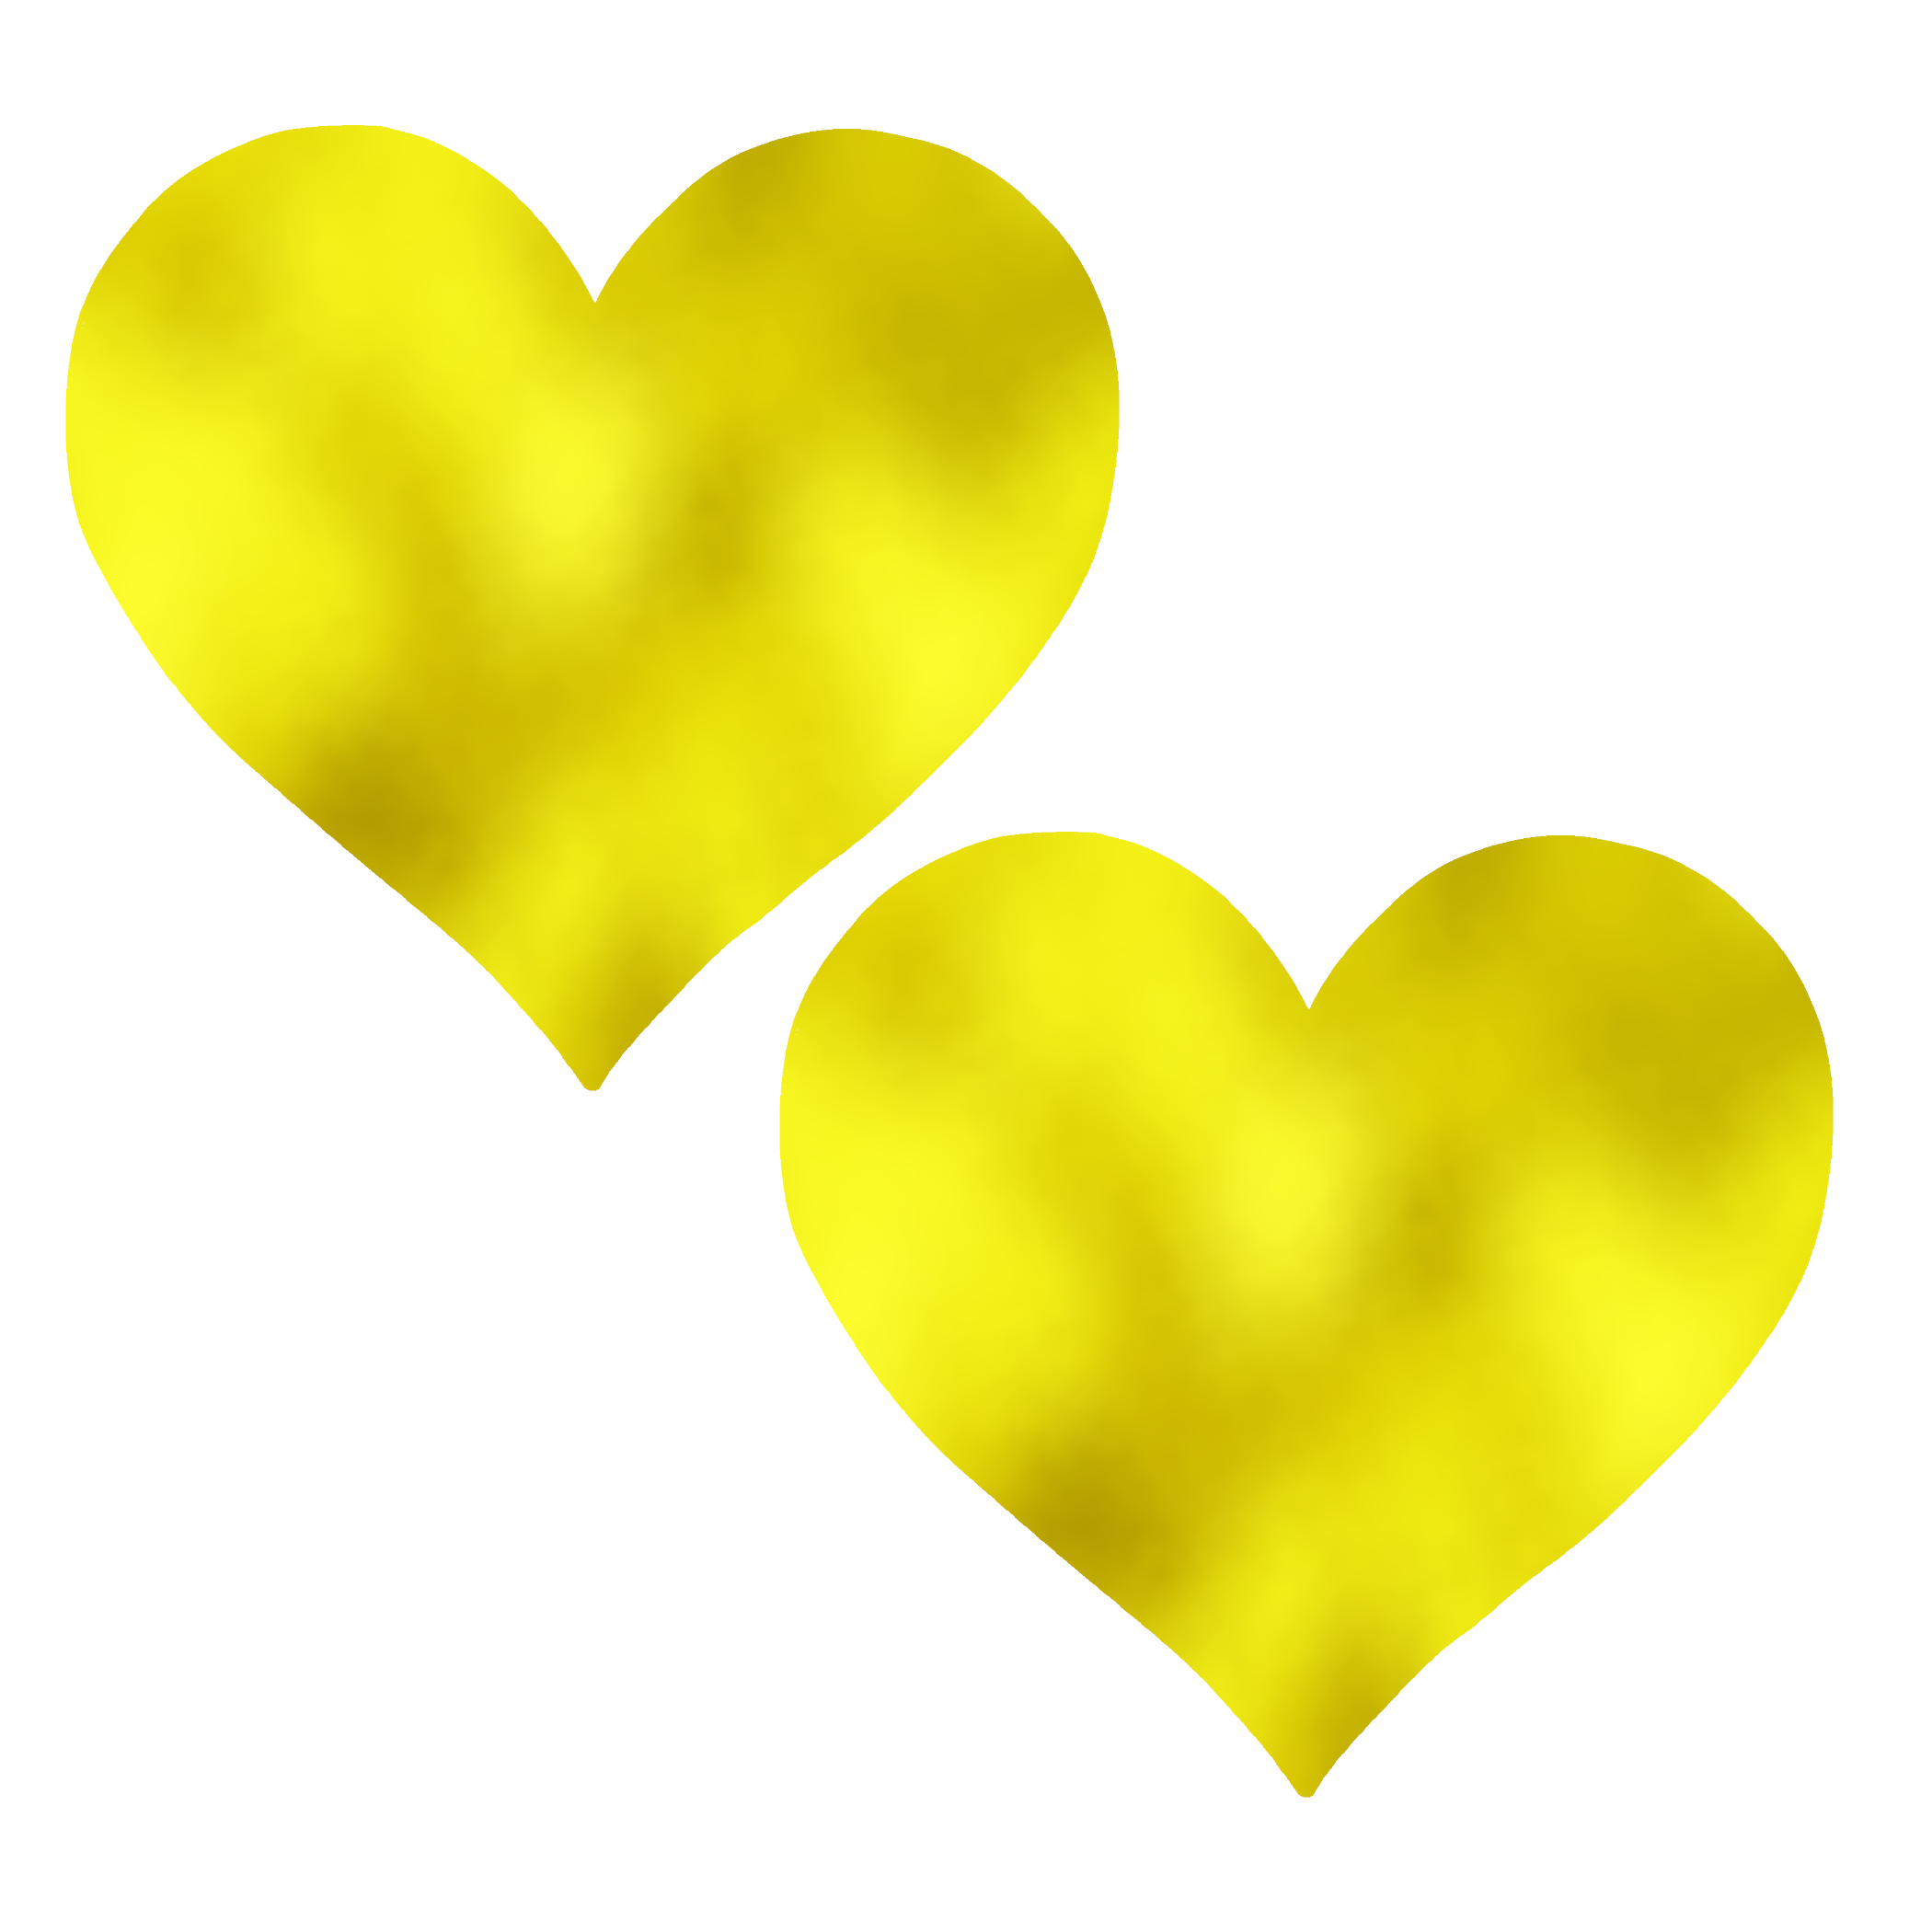 Liquid Yellow Heart